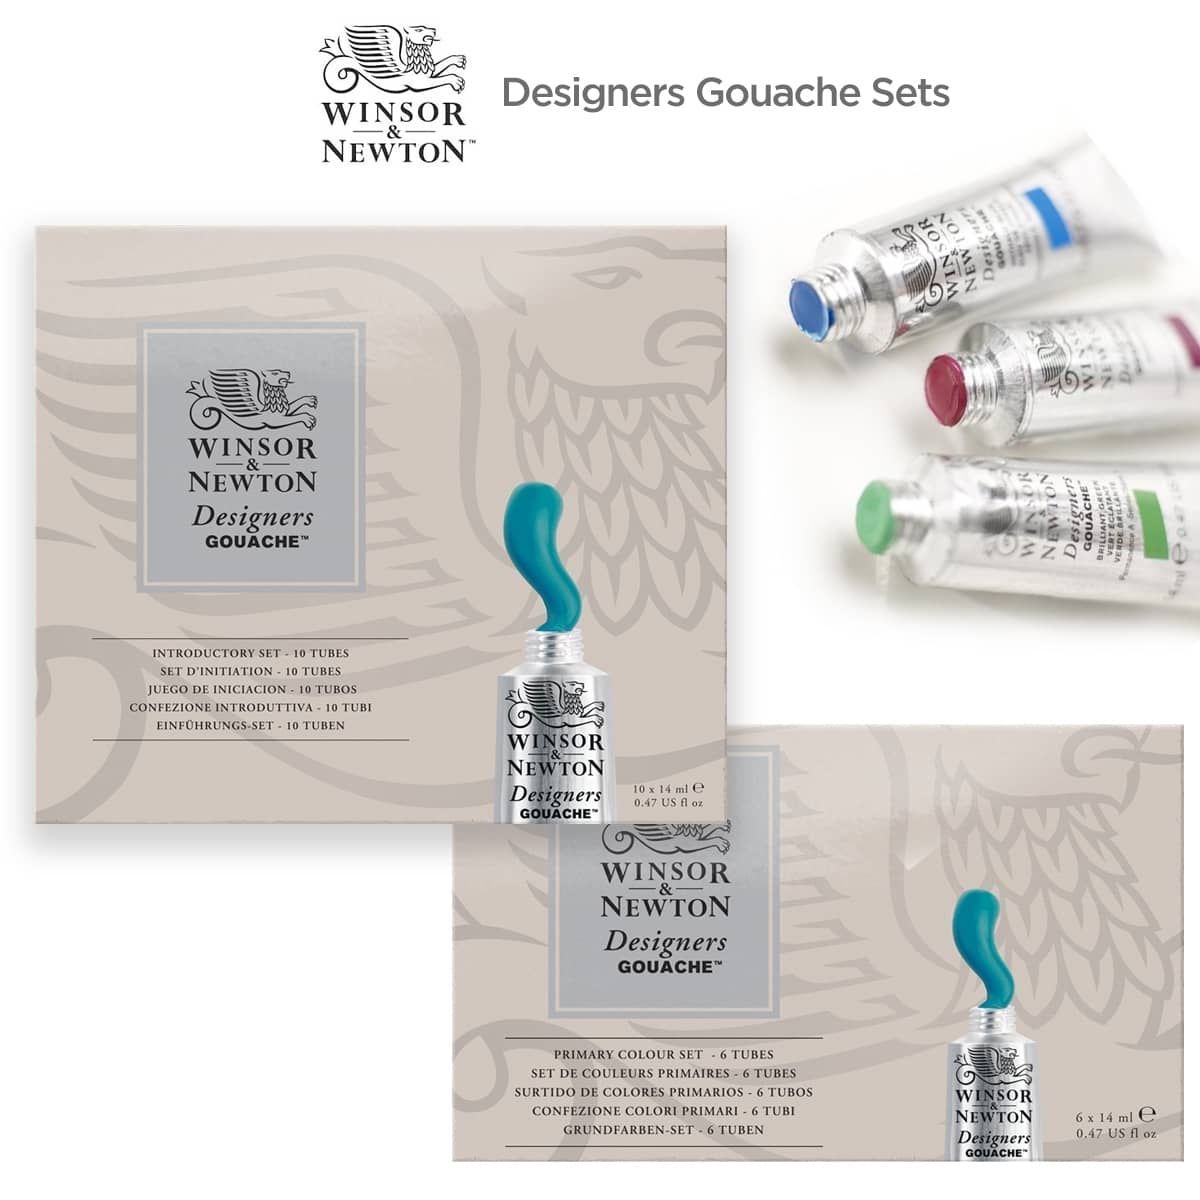 Winsor & Newton Designers Gouache - Primary Set, Set of 6 colors